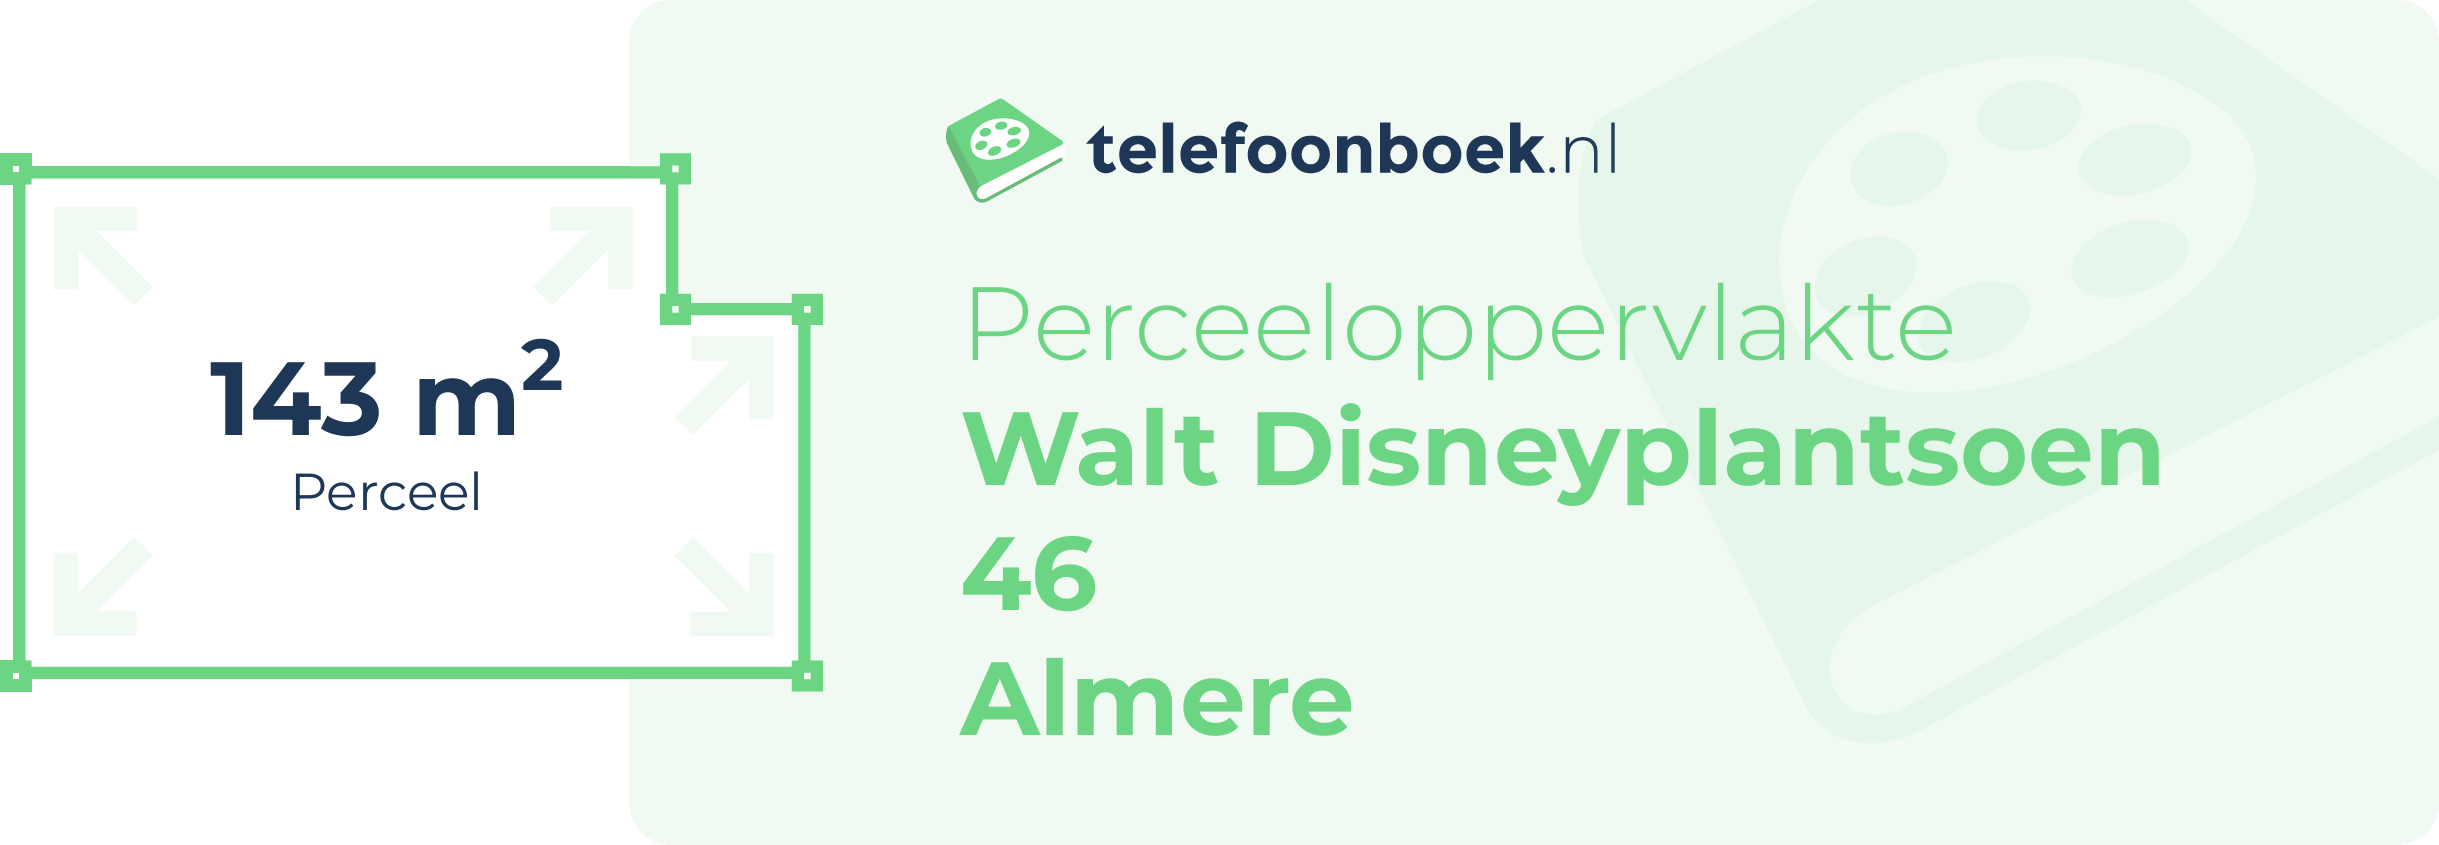 Perceeloppervlakte Walt Disneyplantsoen 46 Almere